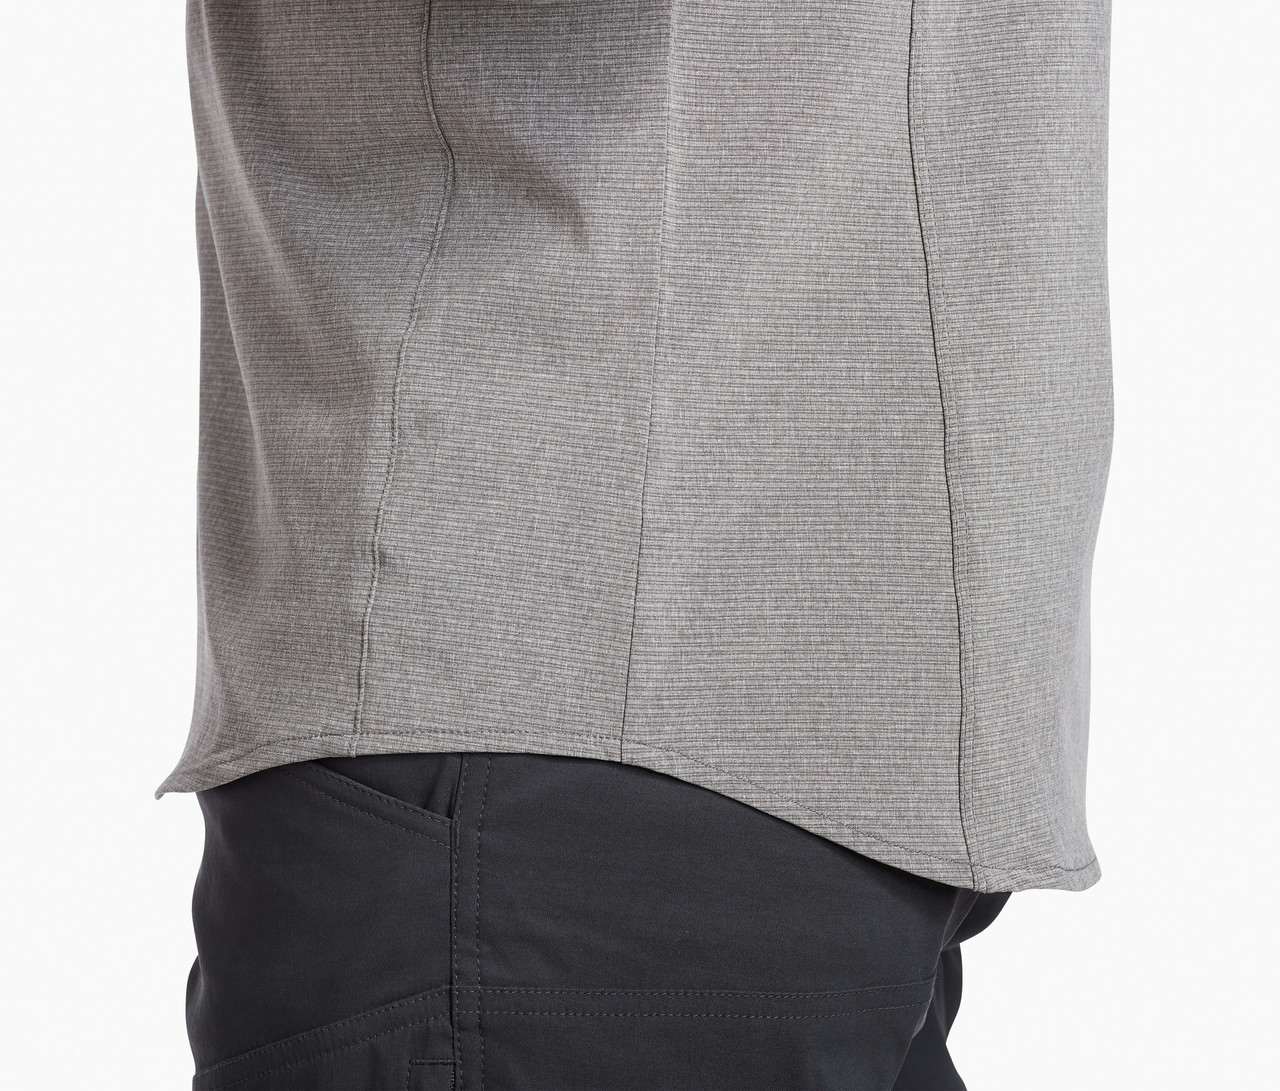 Optimizer Short Sleeve Shirt Anchor Grey